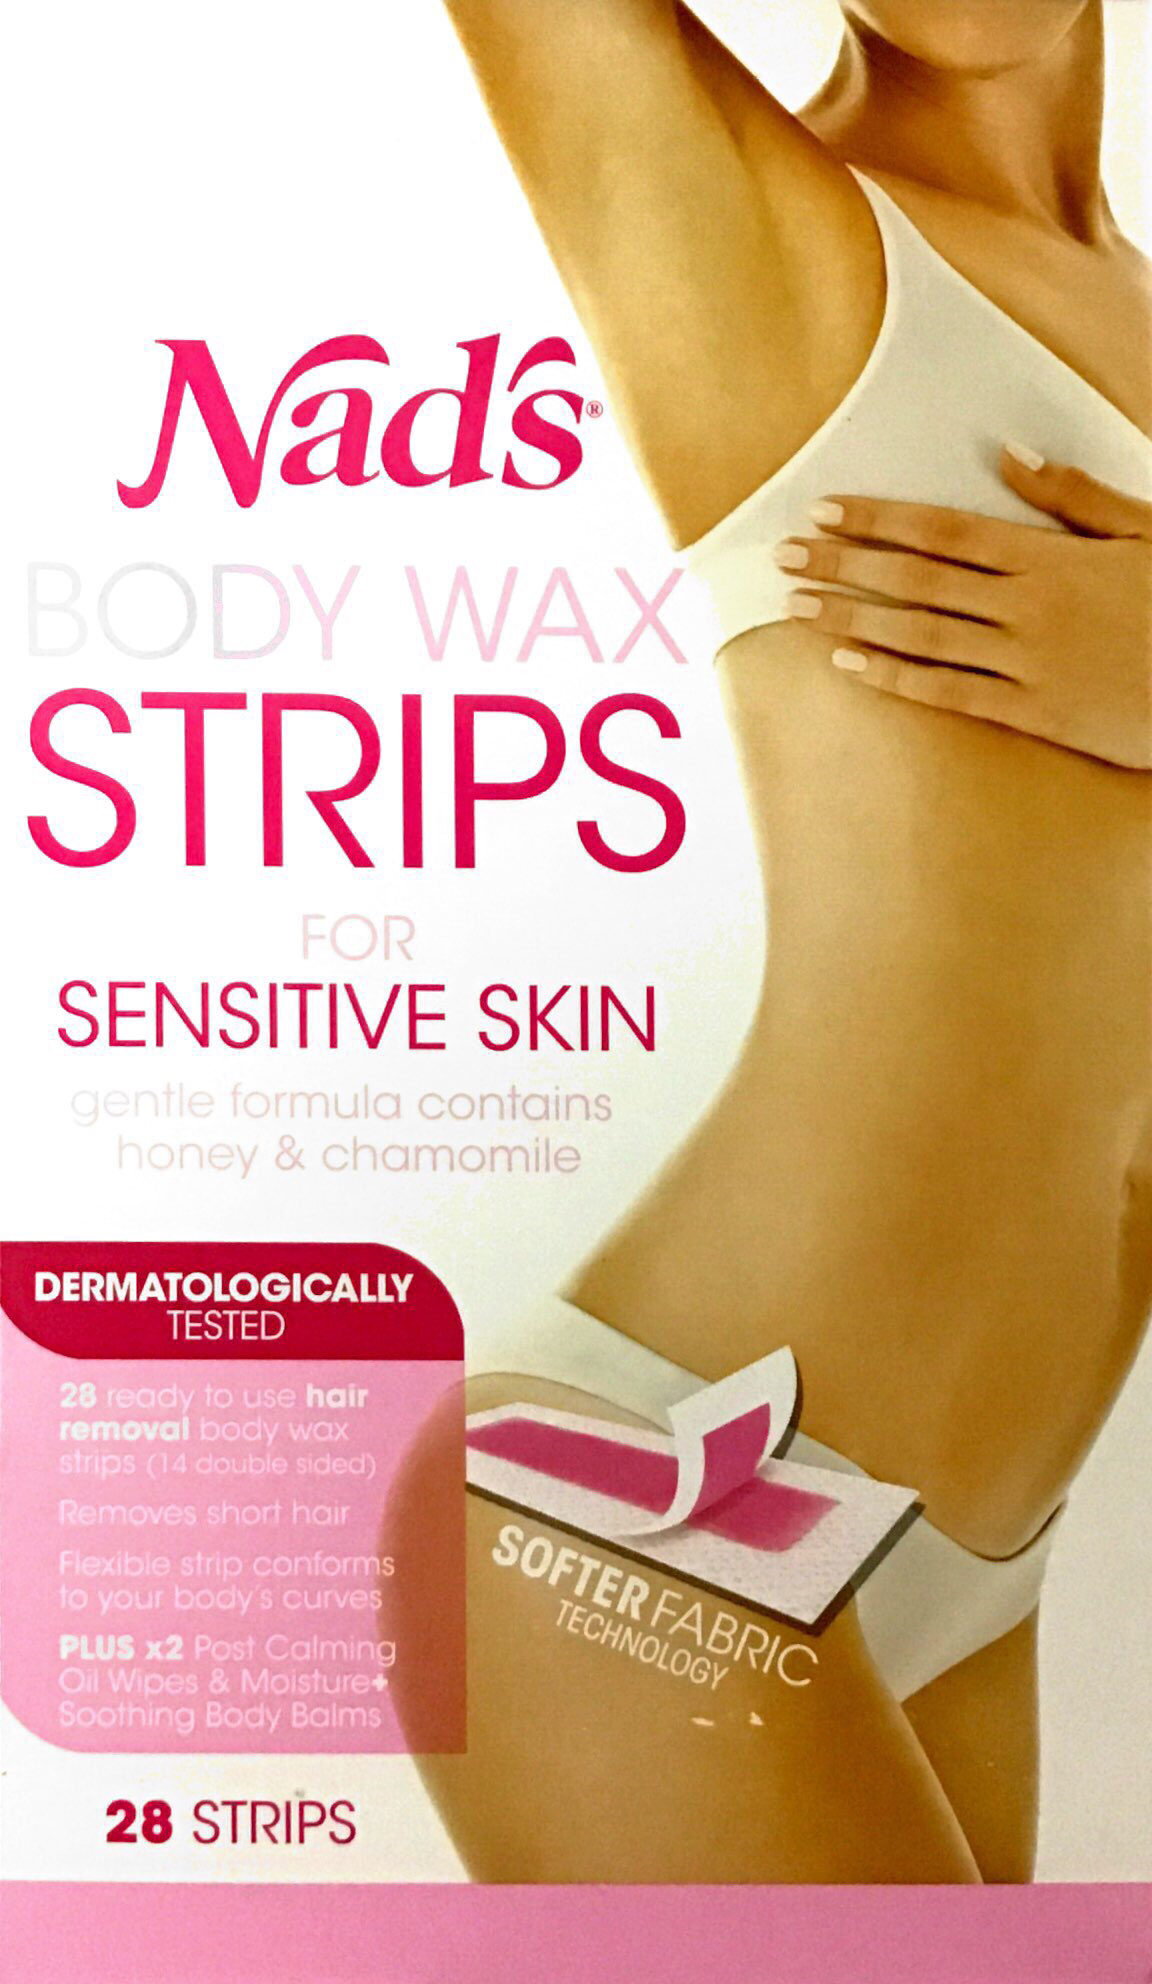 Nads Body Wax Strips for sensitive skin - Strips 28